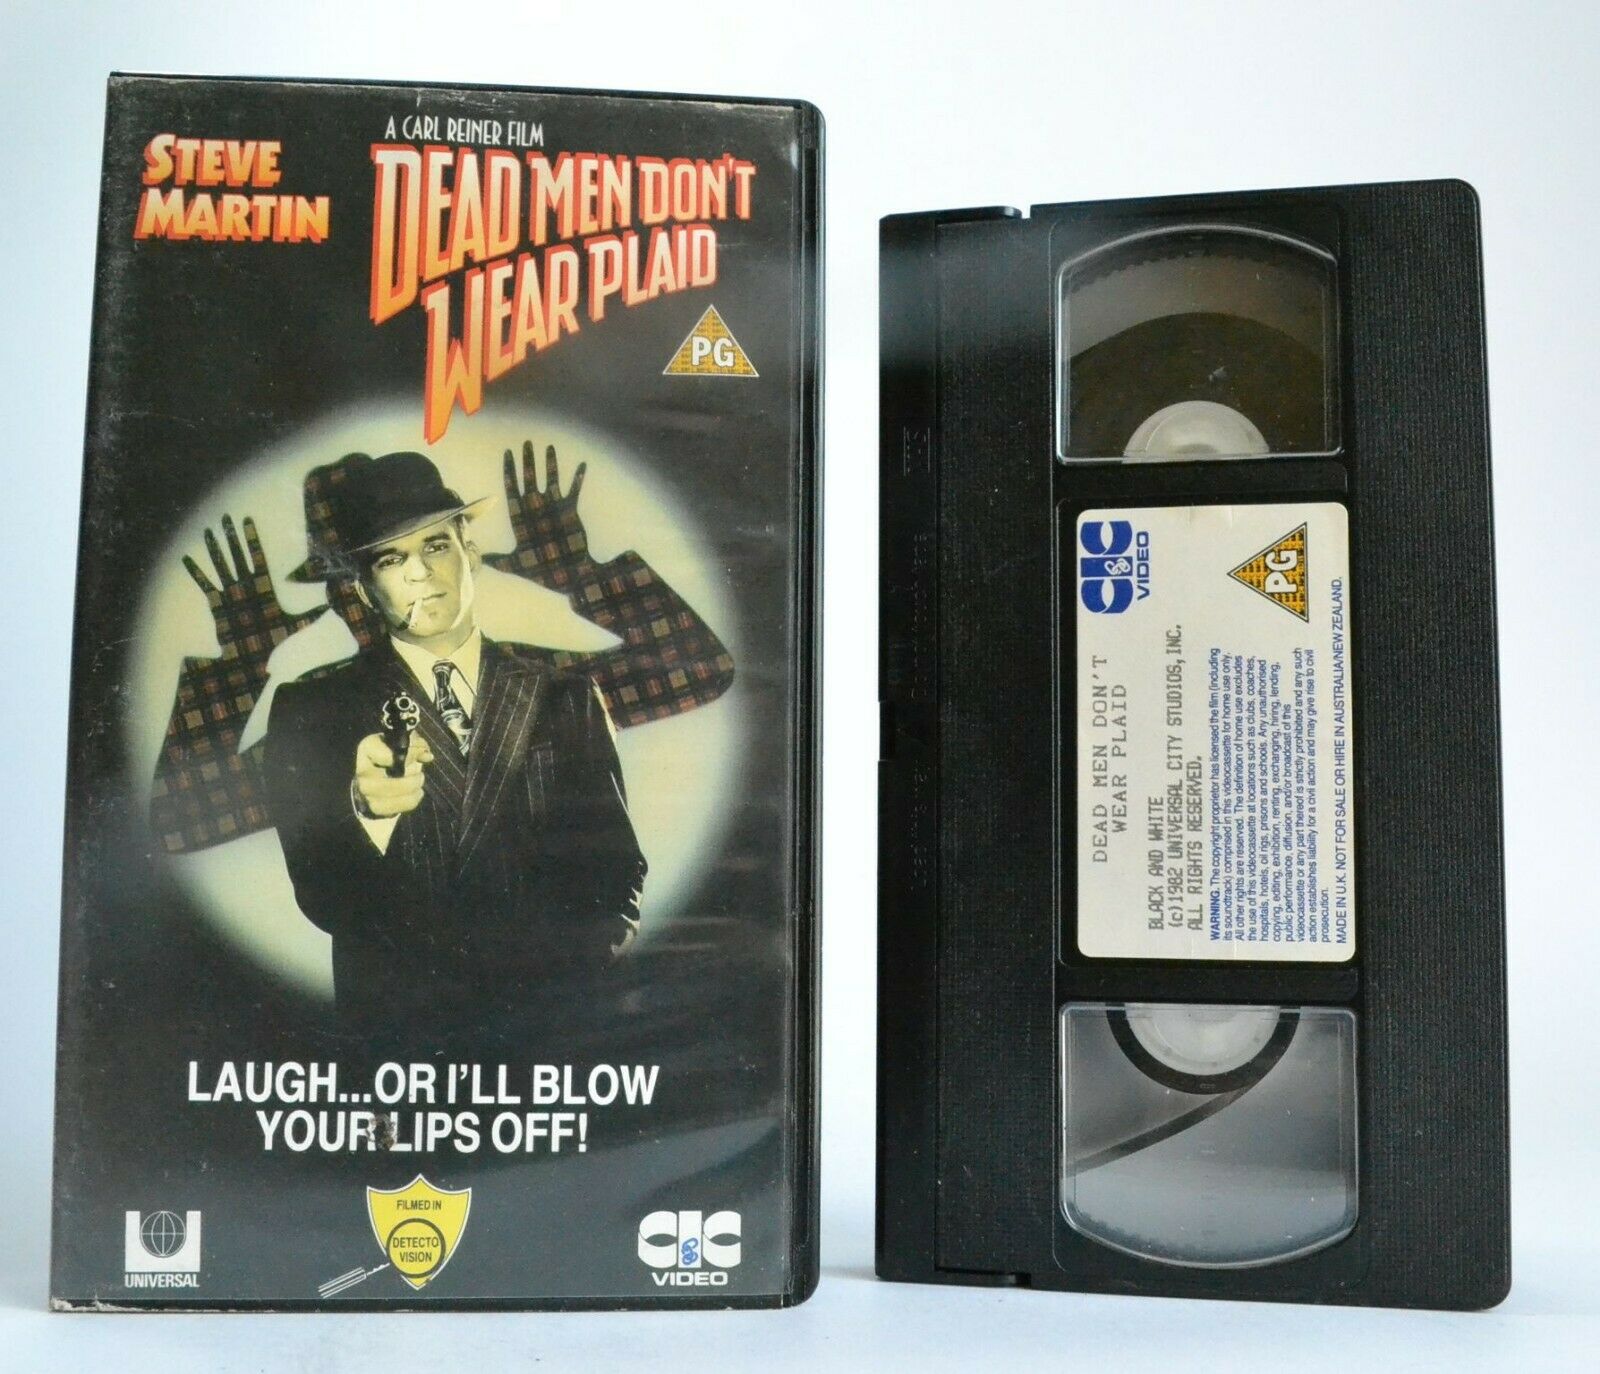 Dead Men Don't Wear Plaid: Carl Reiner - Mystery Comedy - Steve Martin - VHS-